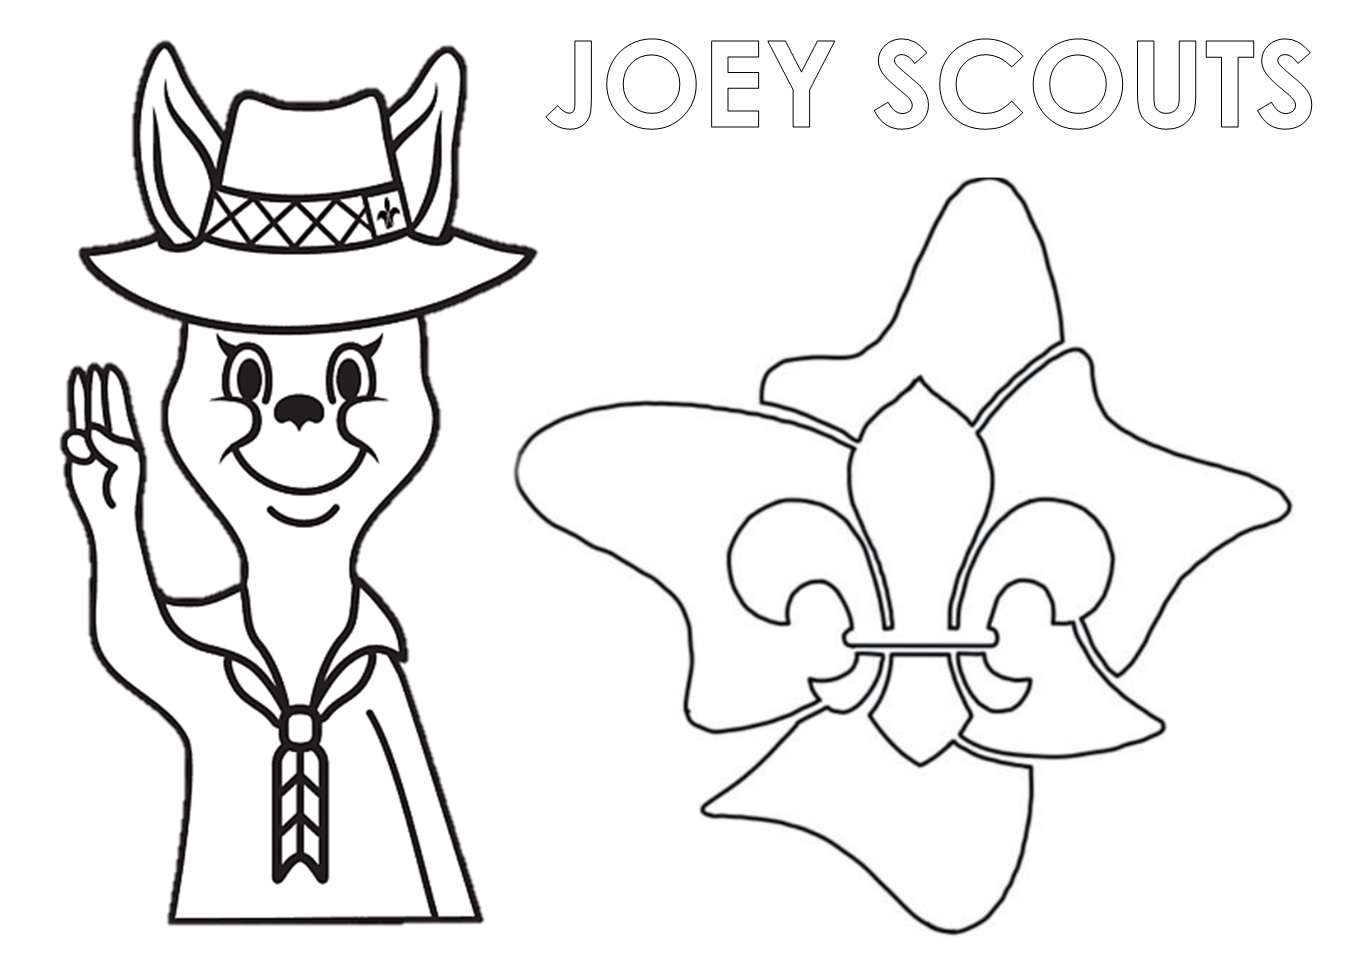 Joey Scout Puzzel Online-Puzzle vom Foto